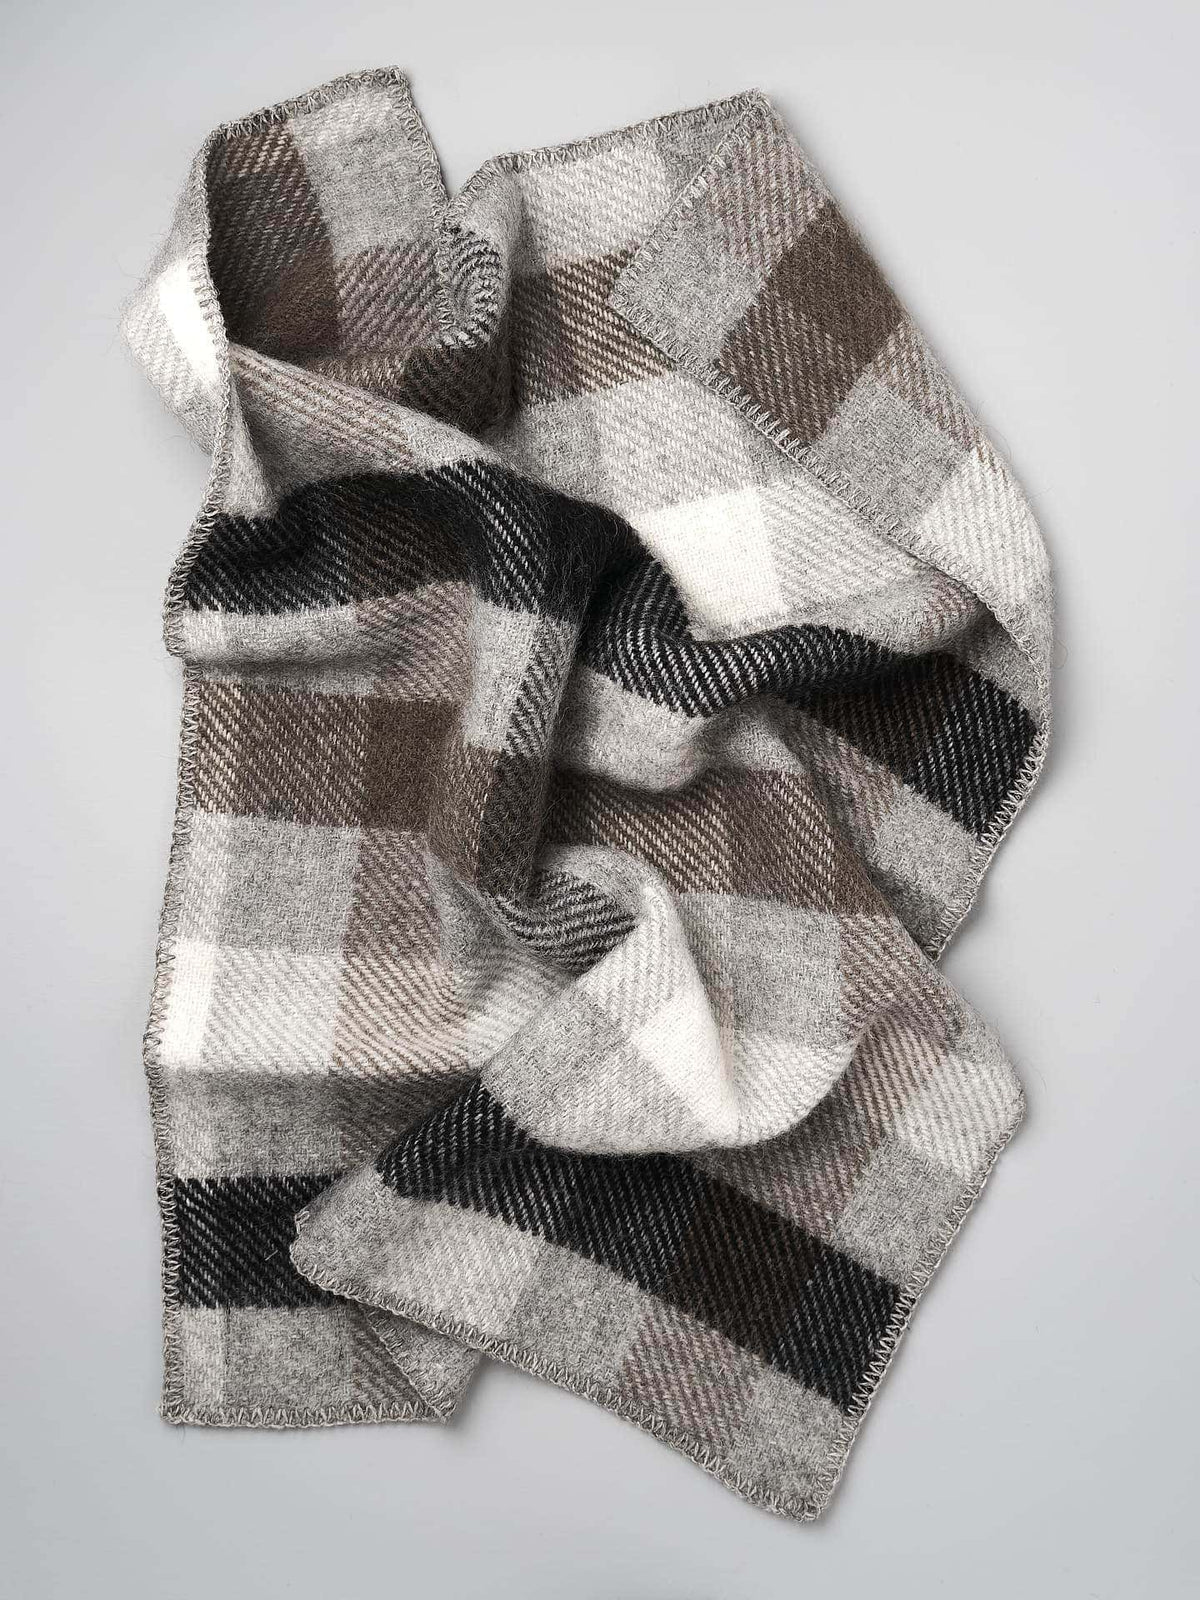 A Klippan Gotland Wool Baby Throw – Multi Grey scarf on a white surface.